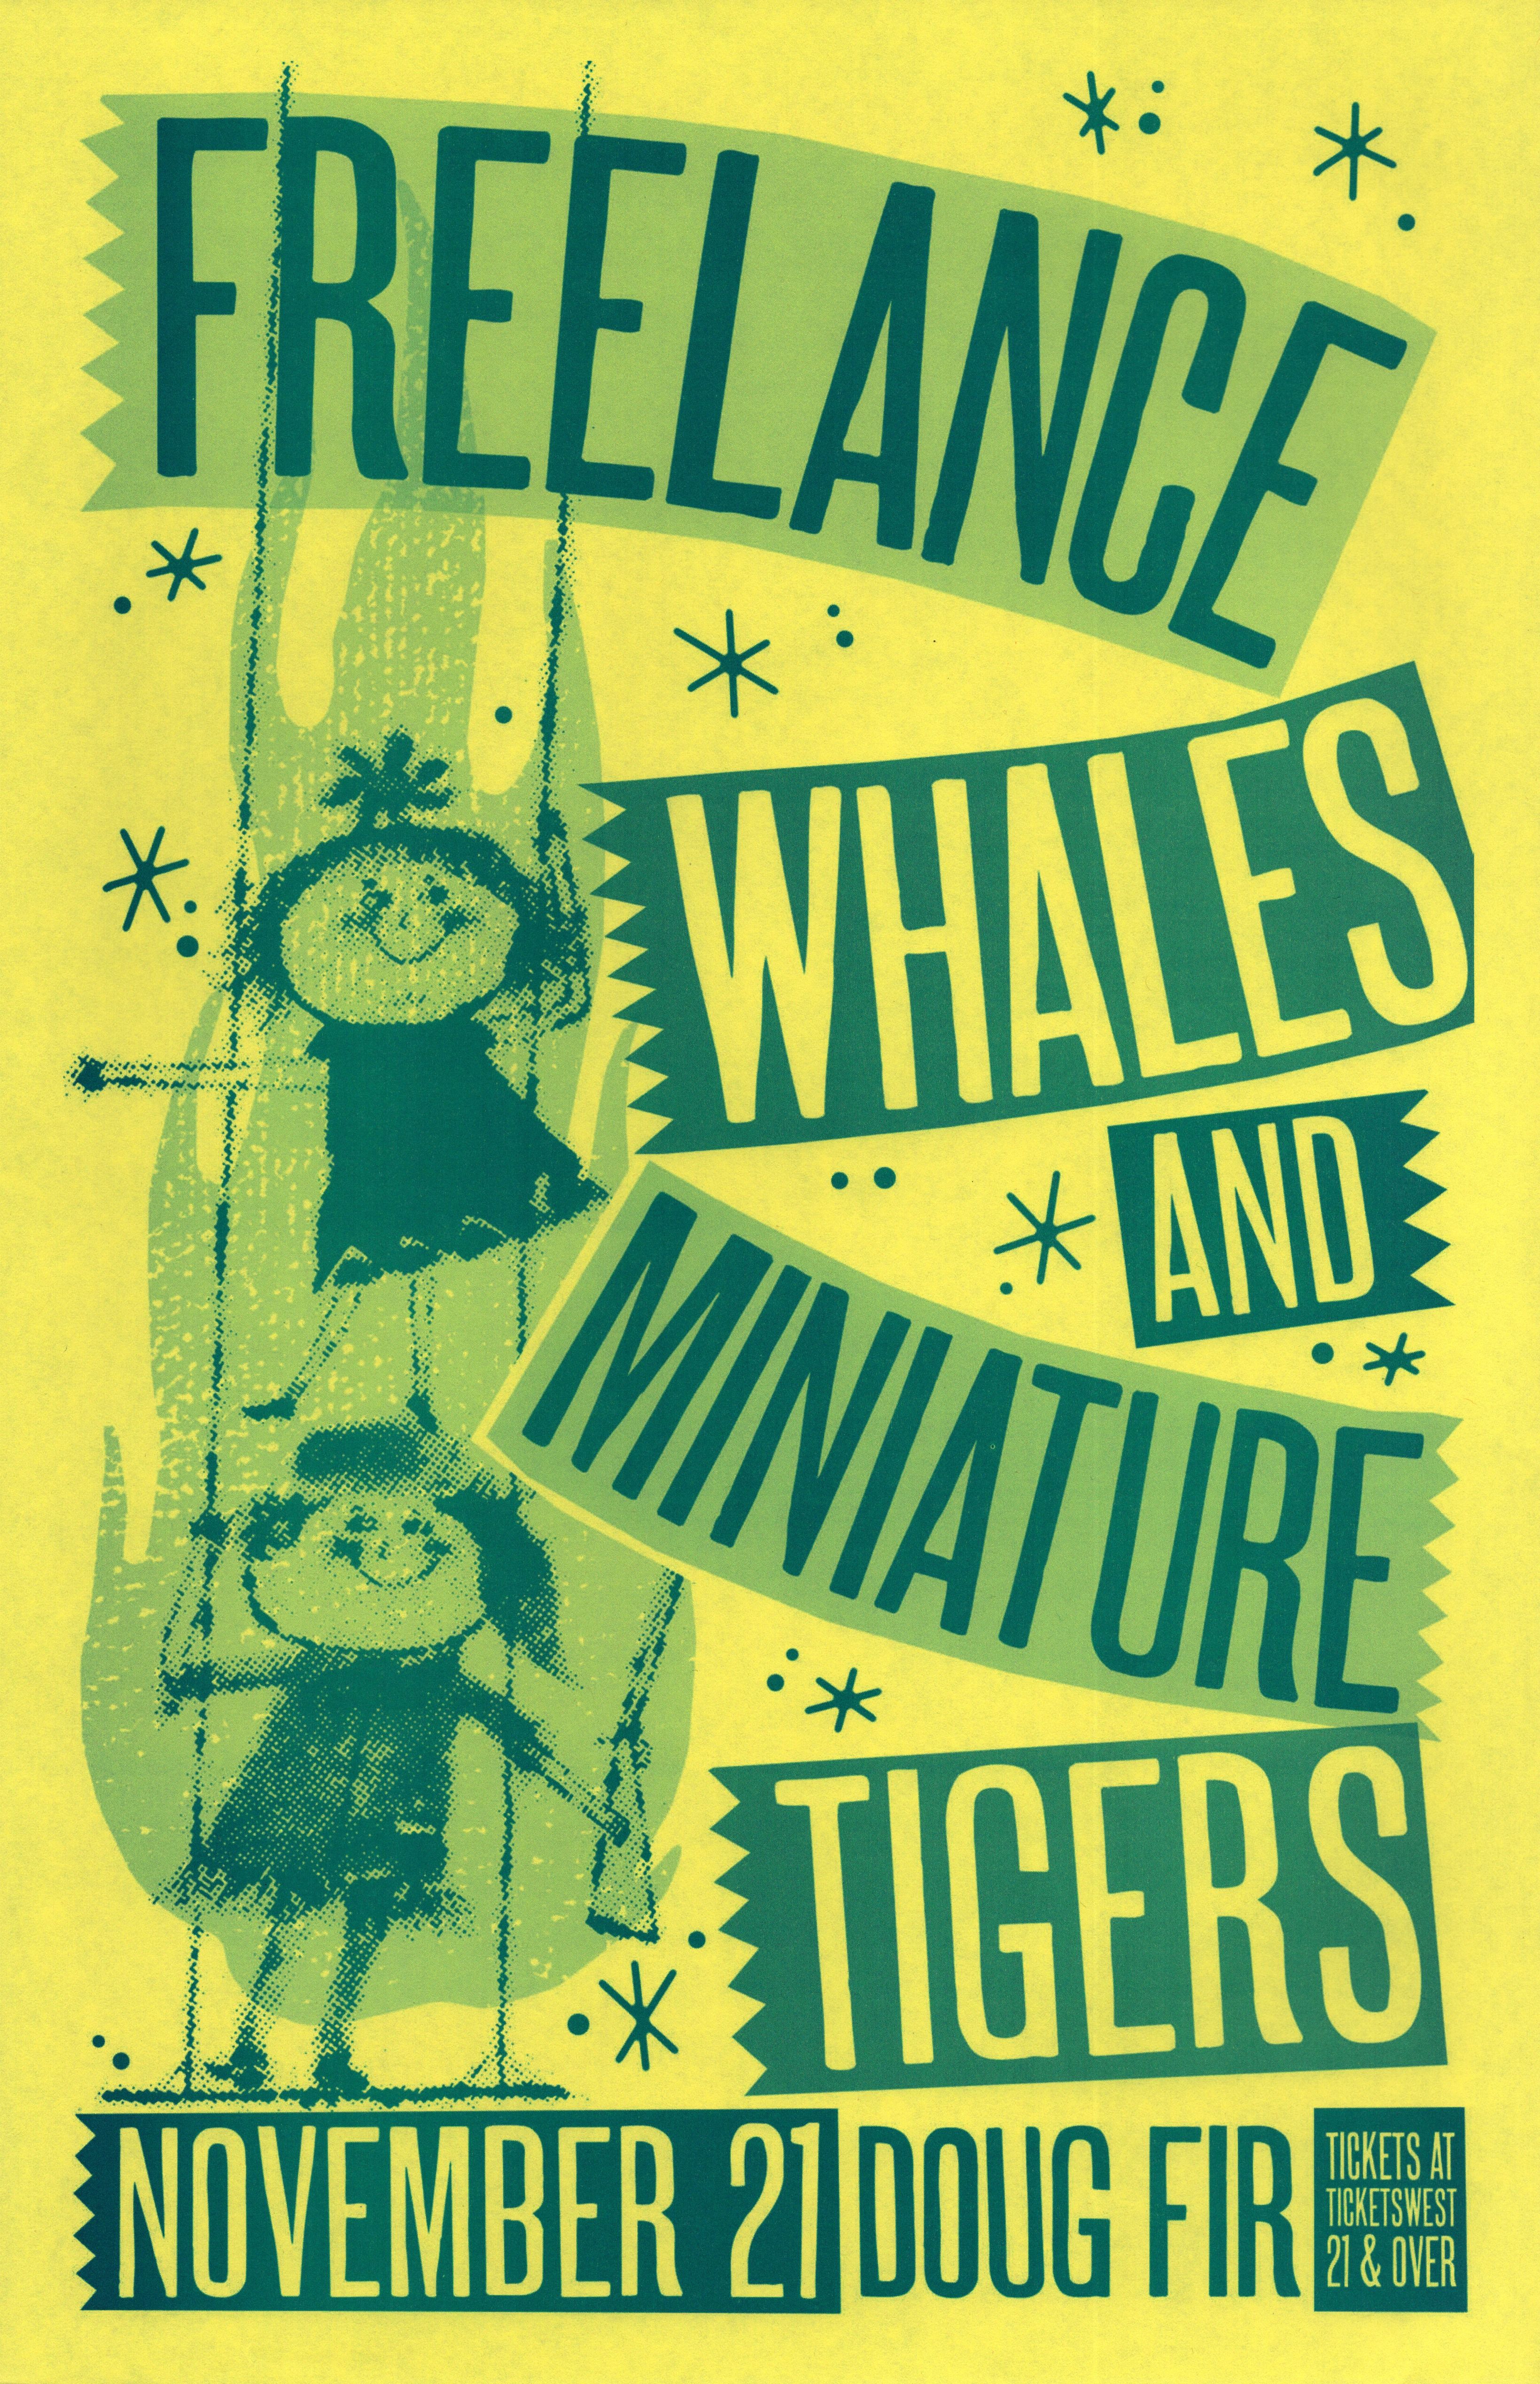 MXP-150.13 Freelance Whales 2010 Doug Fir  Nov 21 Concert Poster